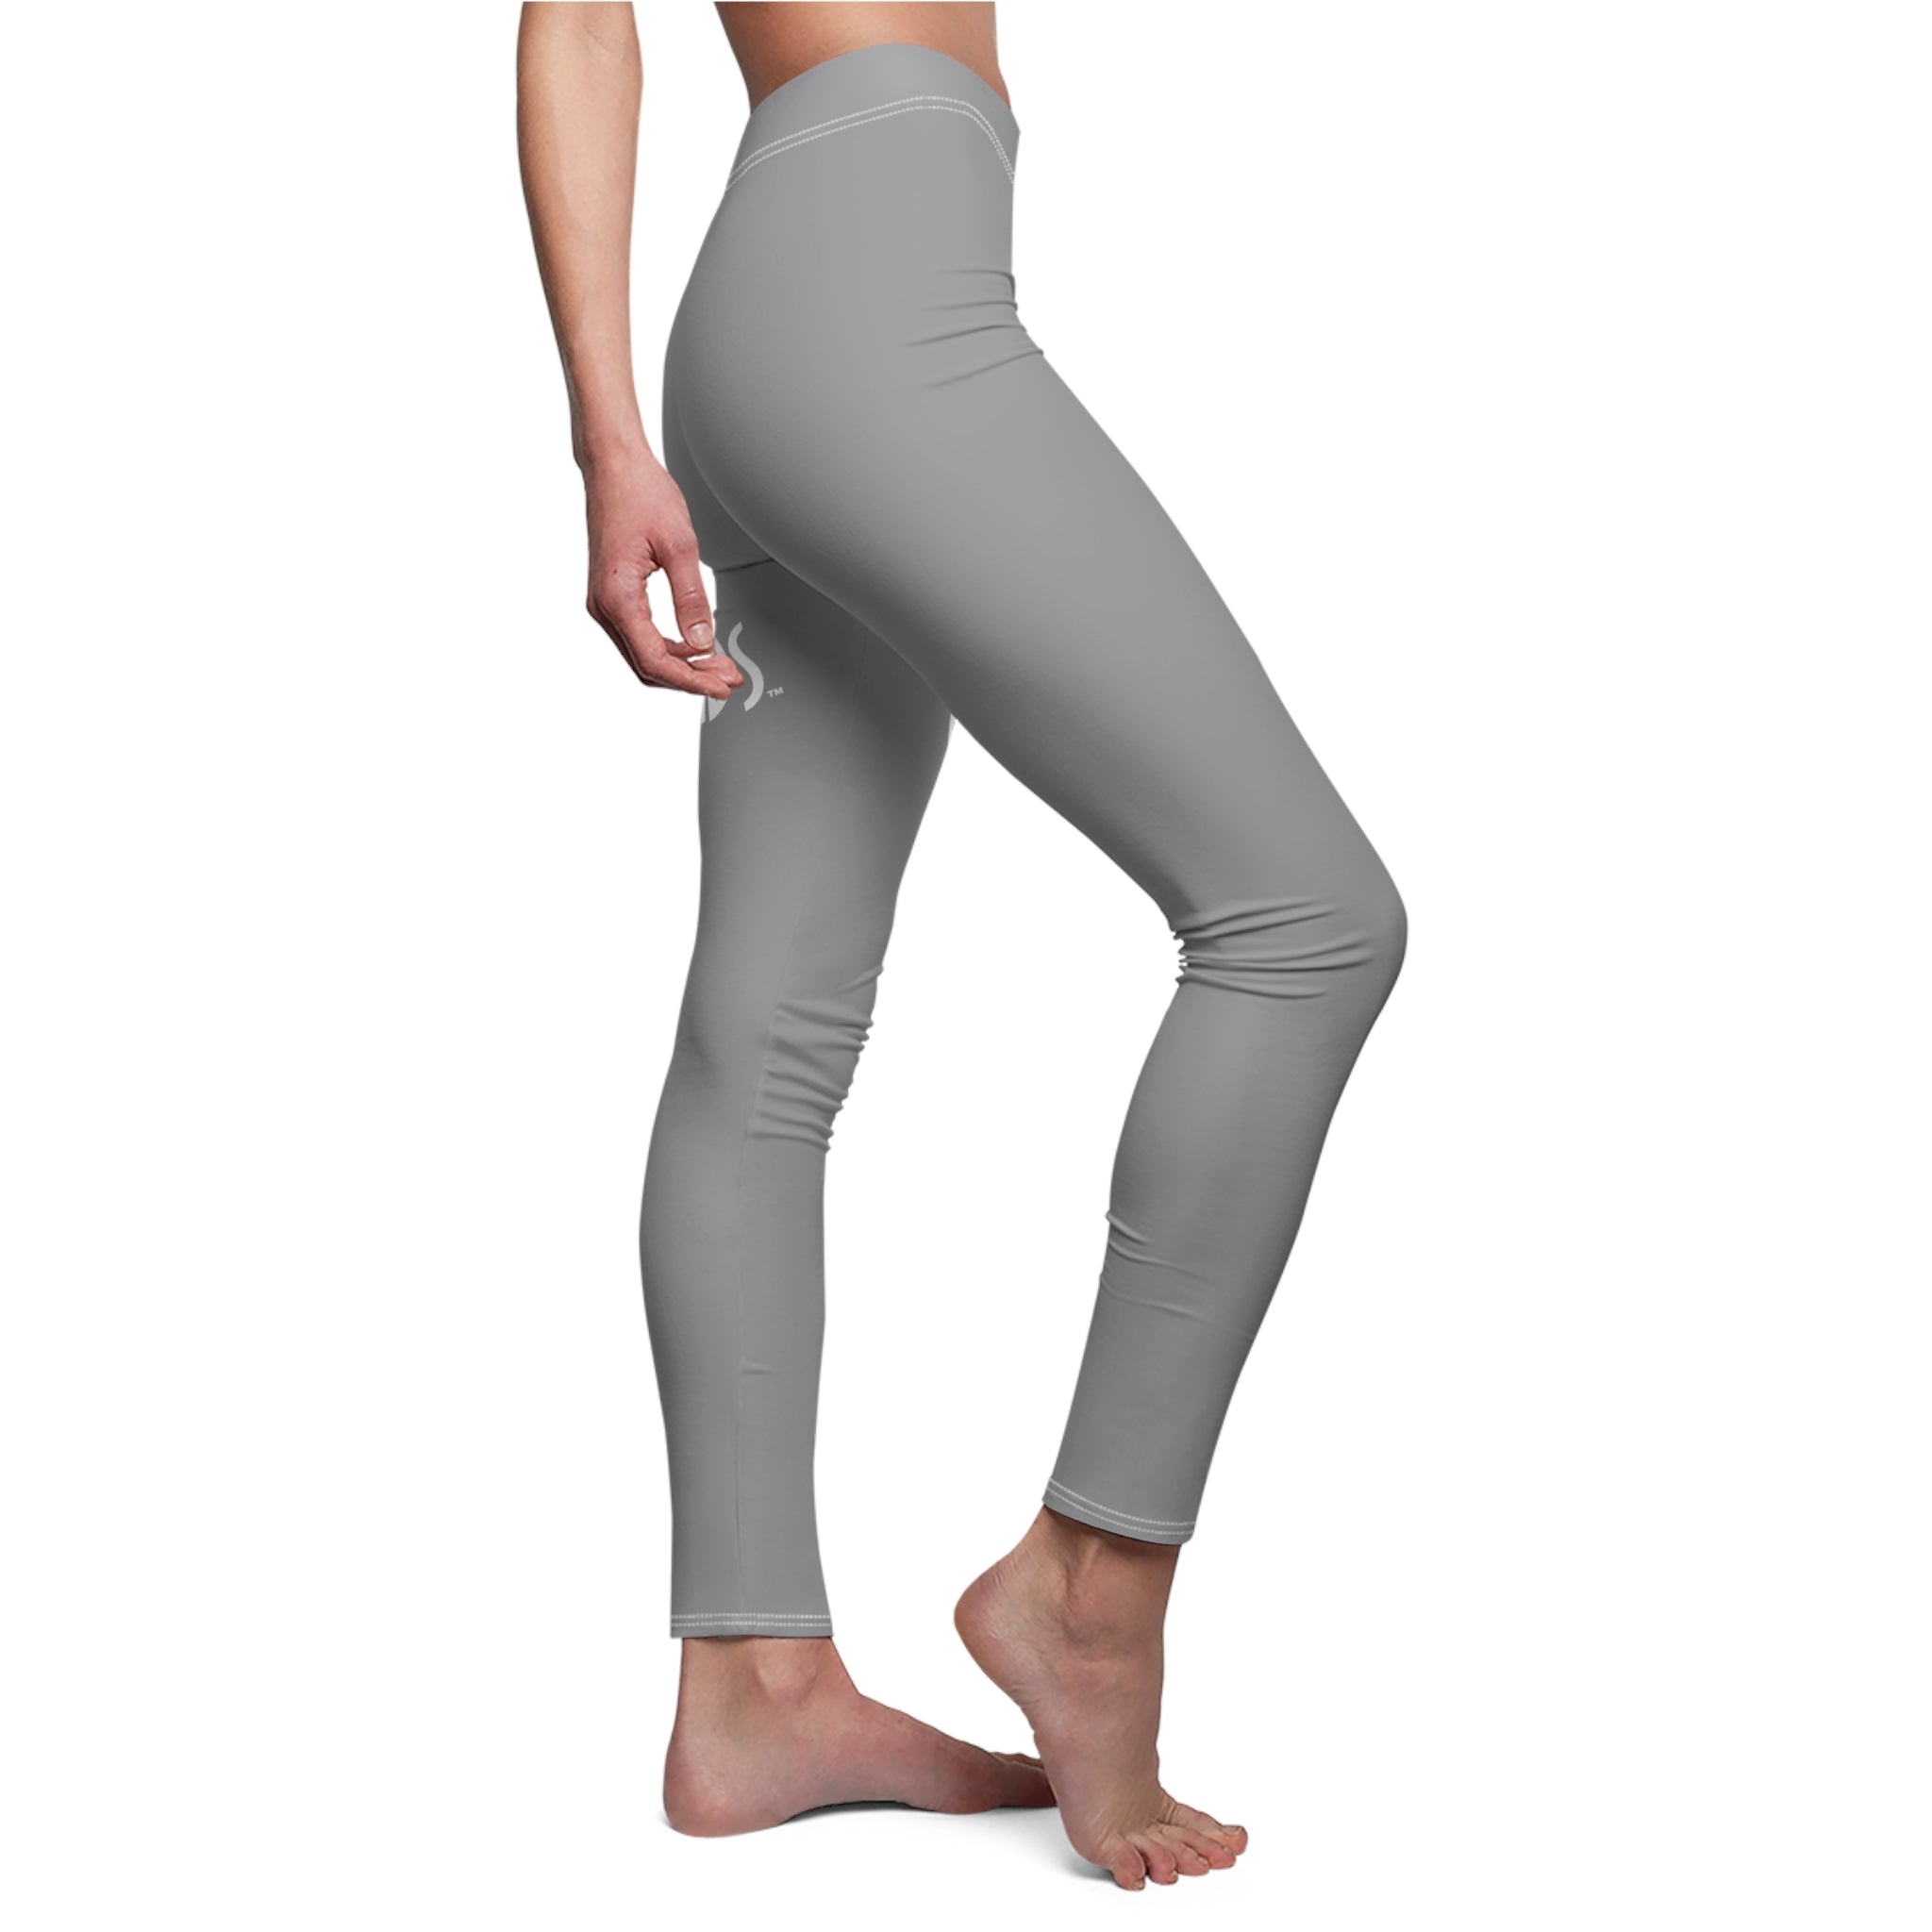 CombinedMinds Women's Cut & Sew Casual Leggings-Grey/White Logo